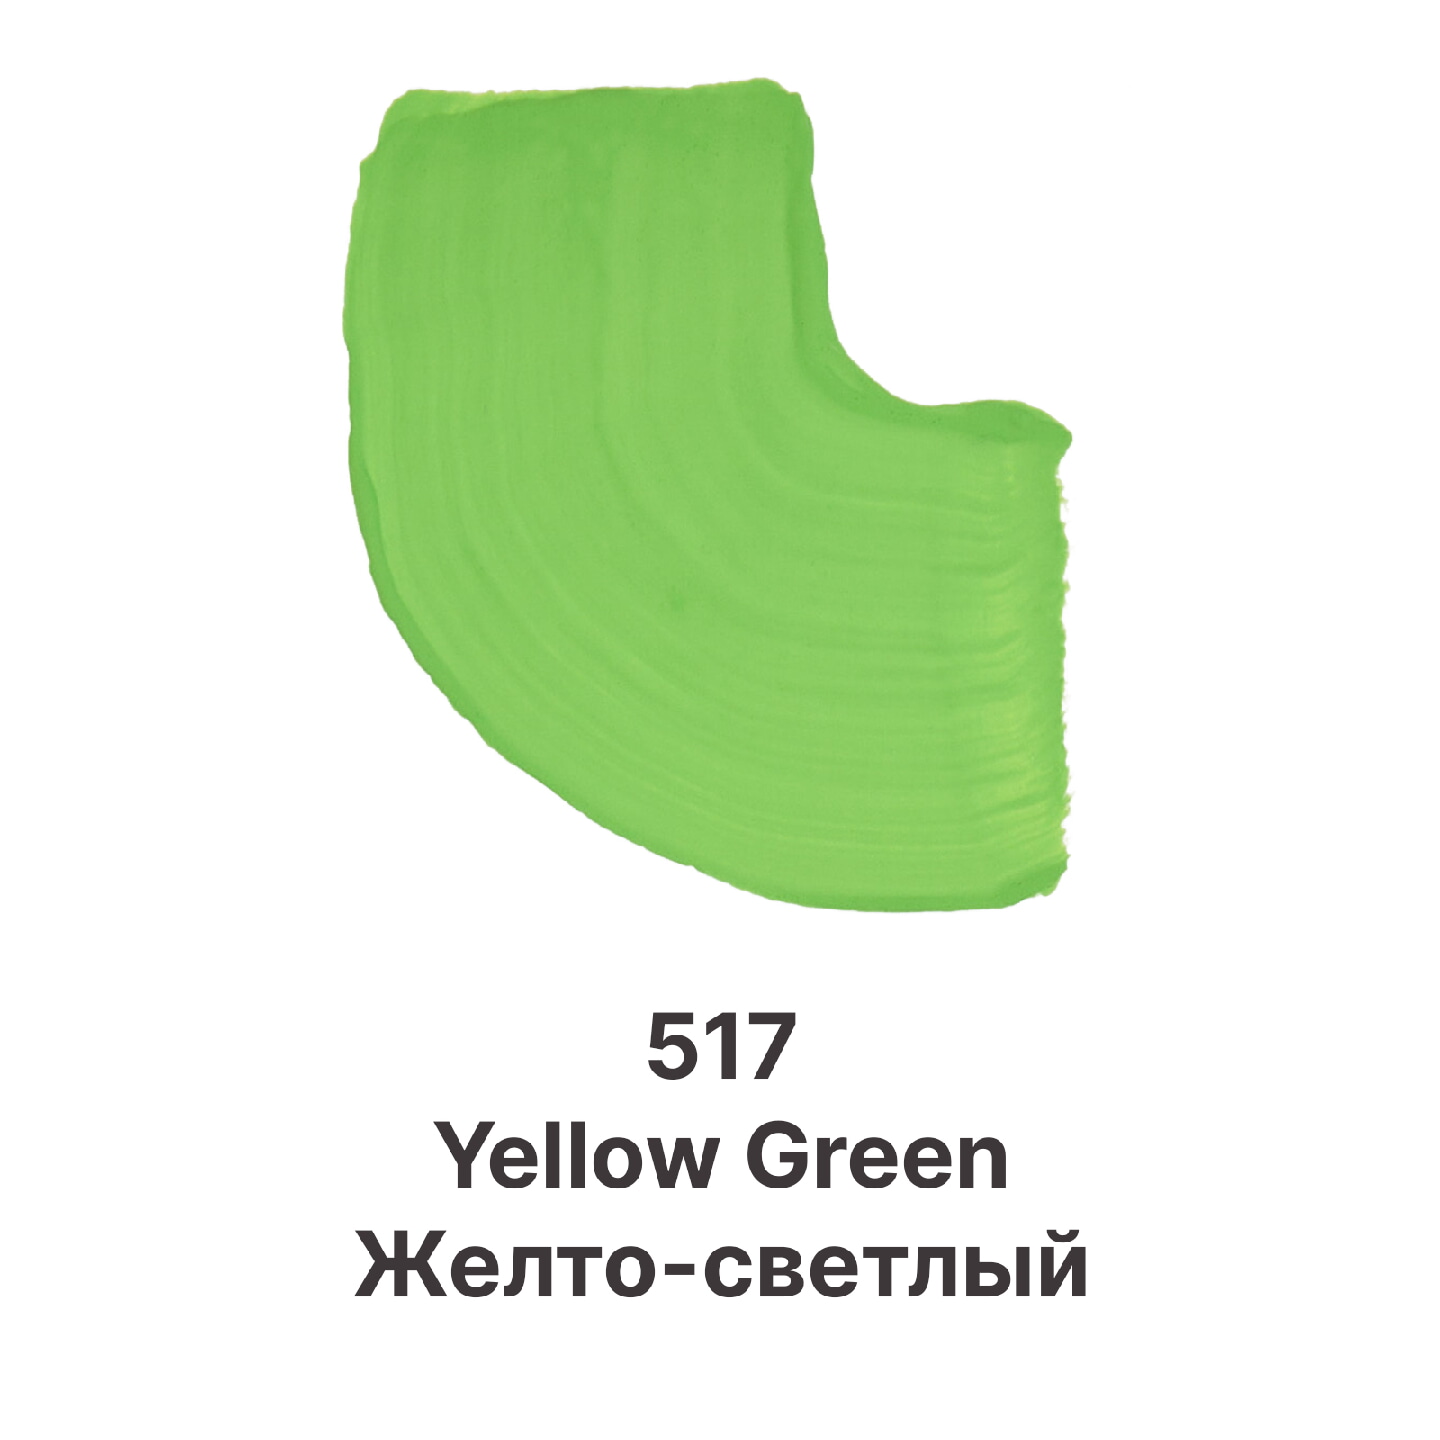 Гуашь Dmast дой-пак 80мл 517 Желто-зеленый